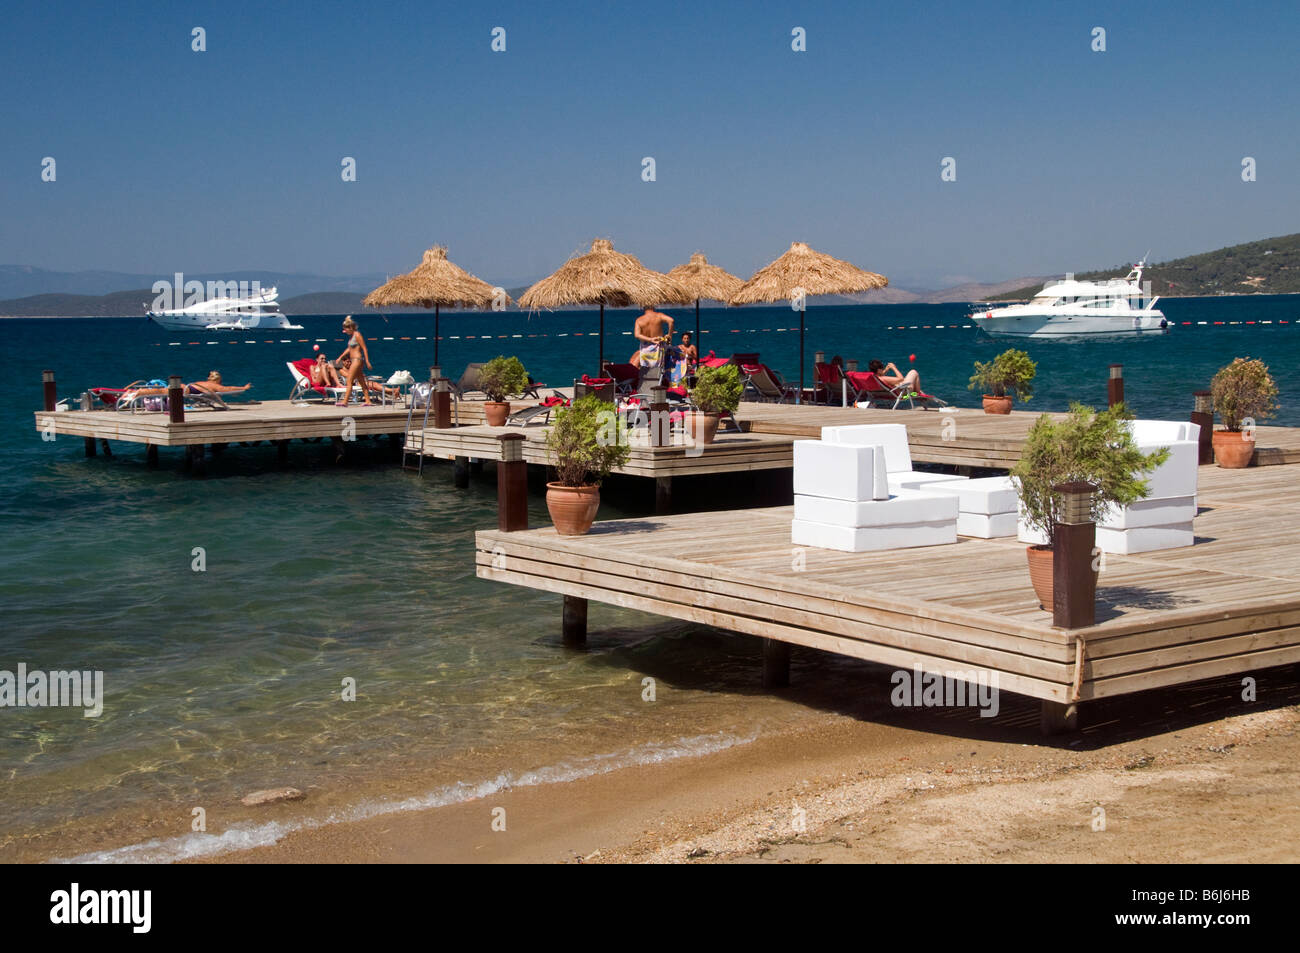 Turkbuku clubs de playa, Bodrum, Turquía. Foto de stock